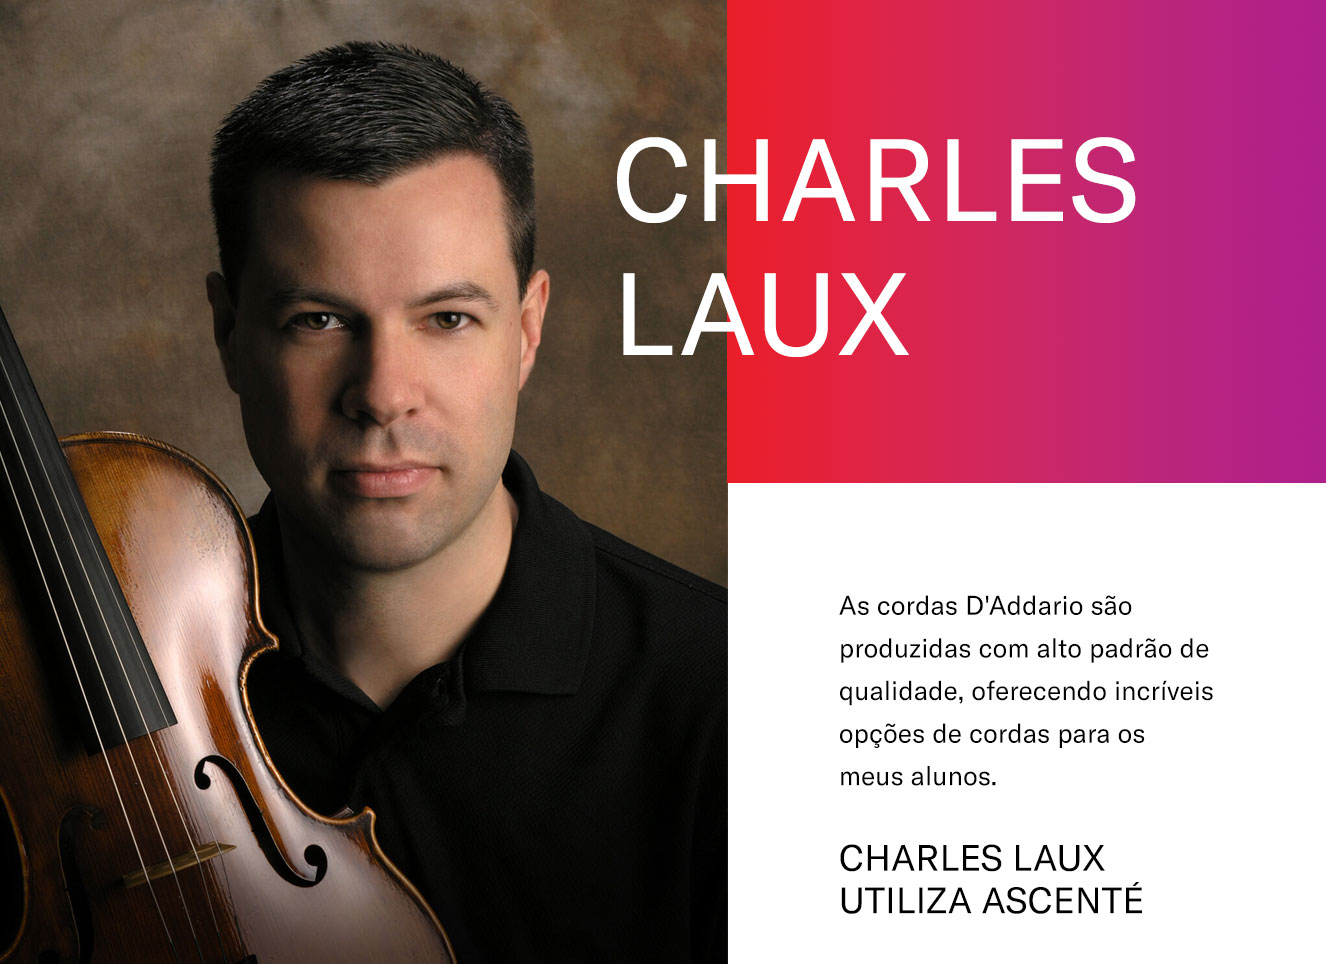 Charles Laux